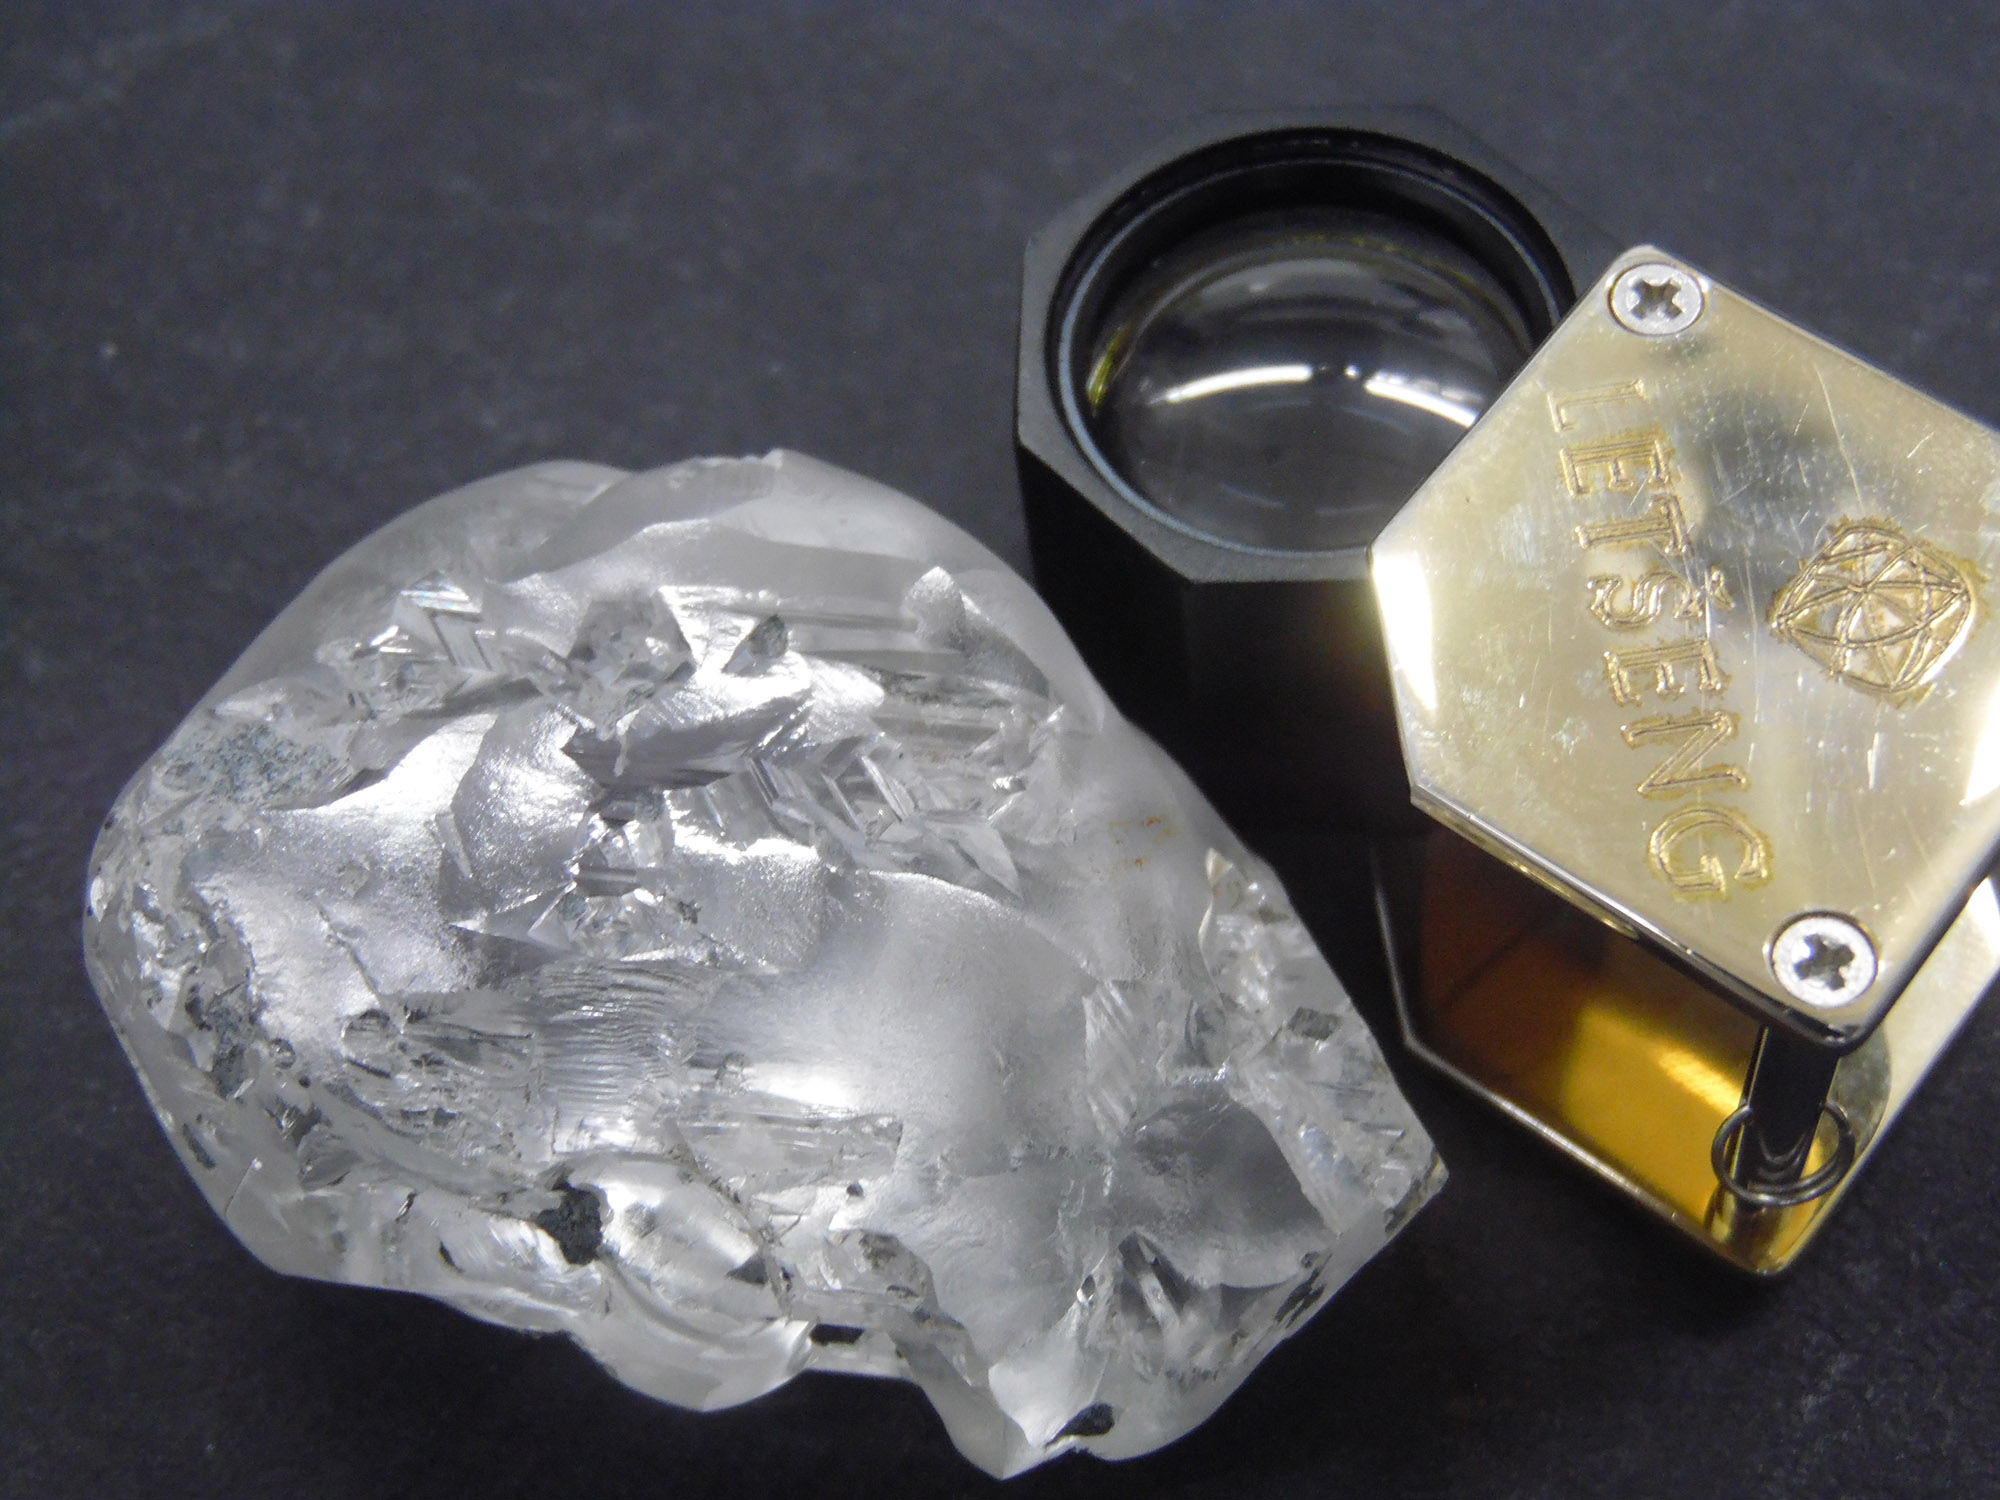 Huge African diamond sells for over $12 million